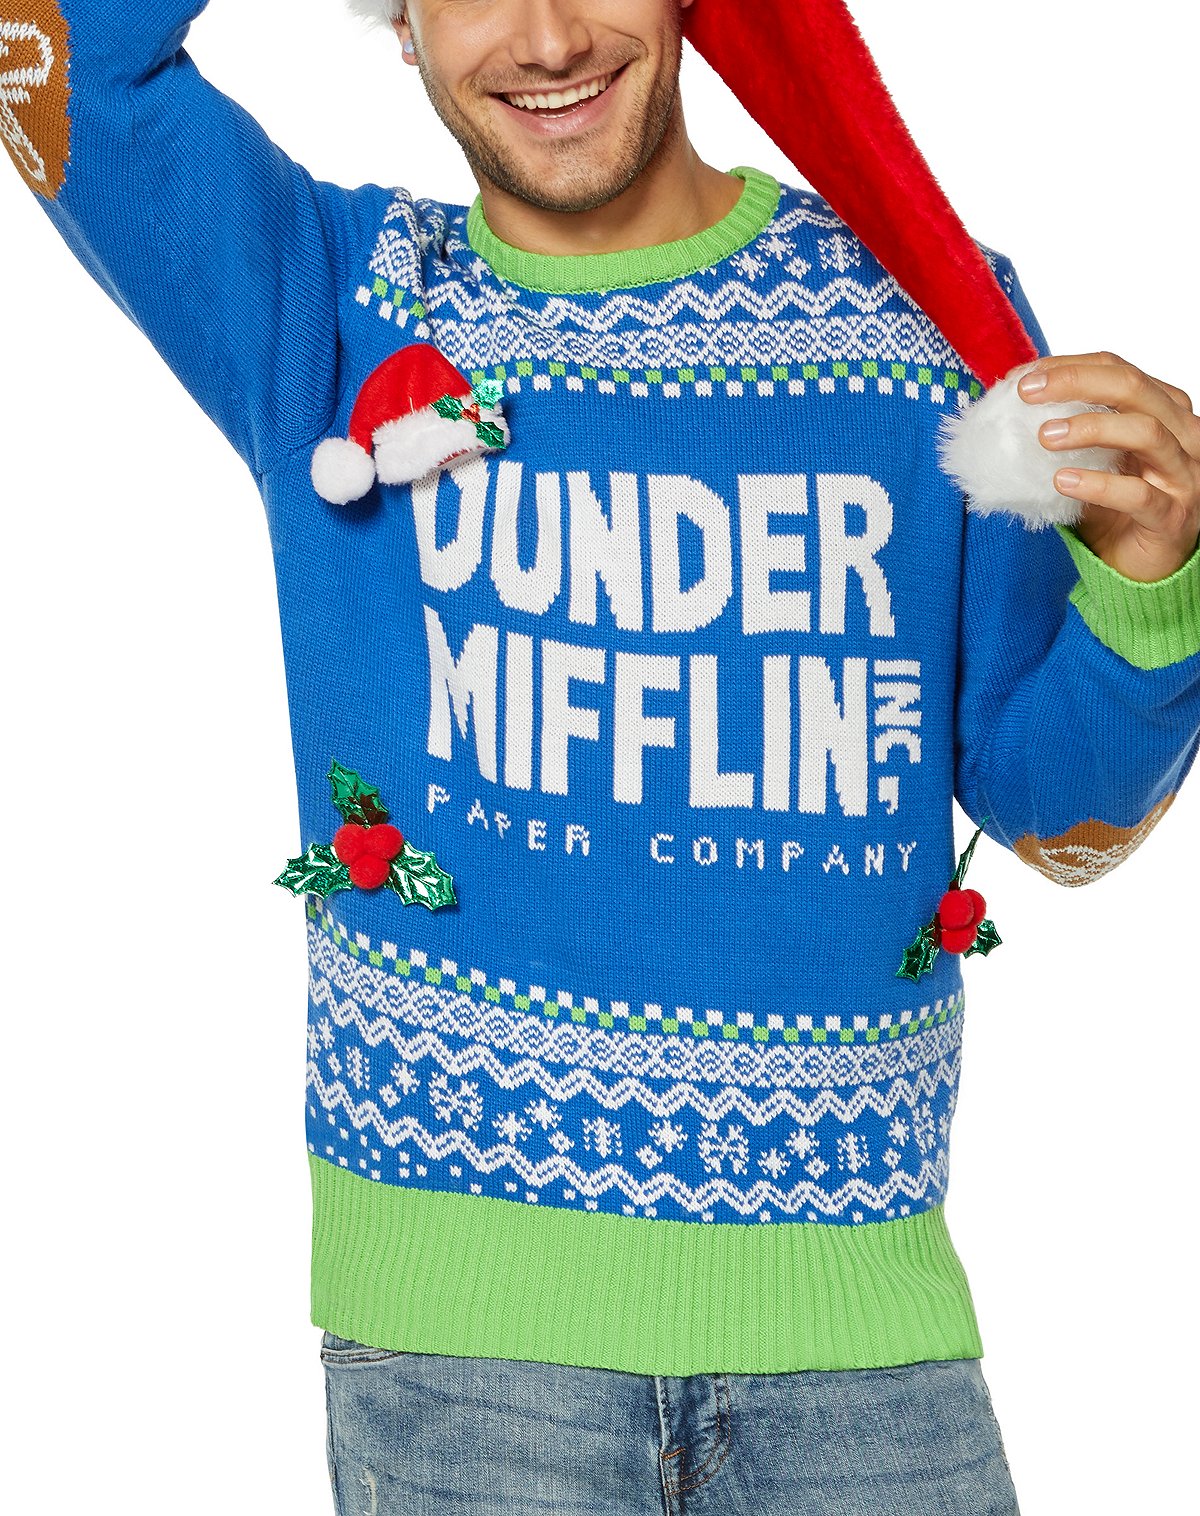 Dunder Mifflin Ugly Christmas Sweater